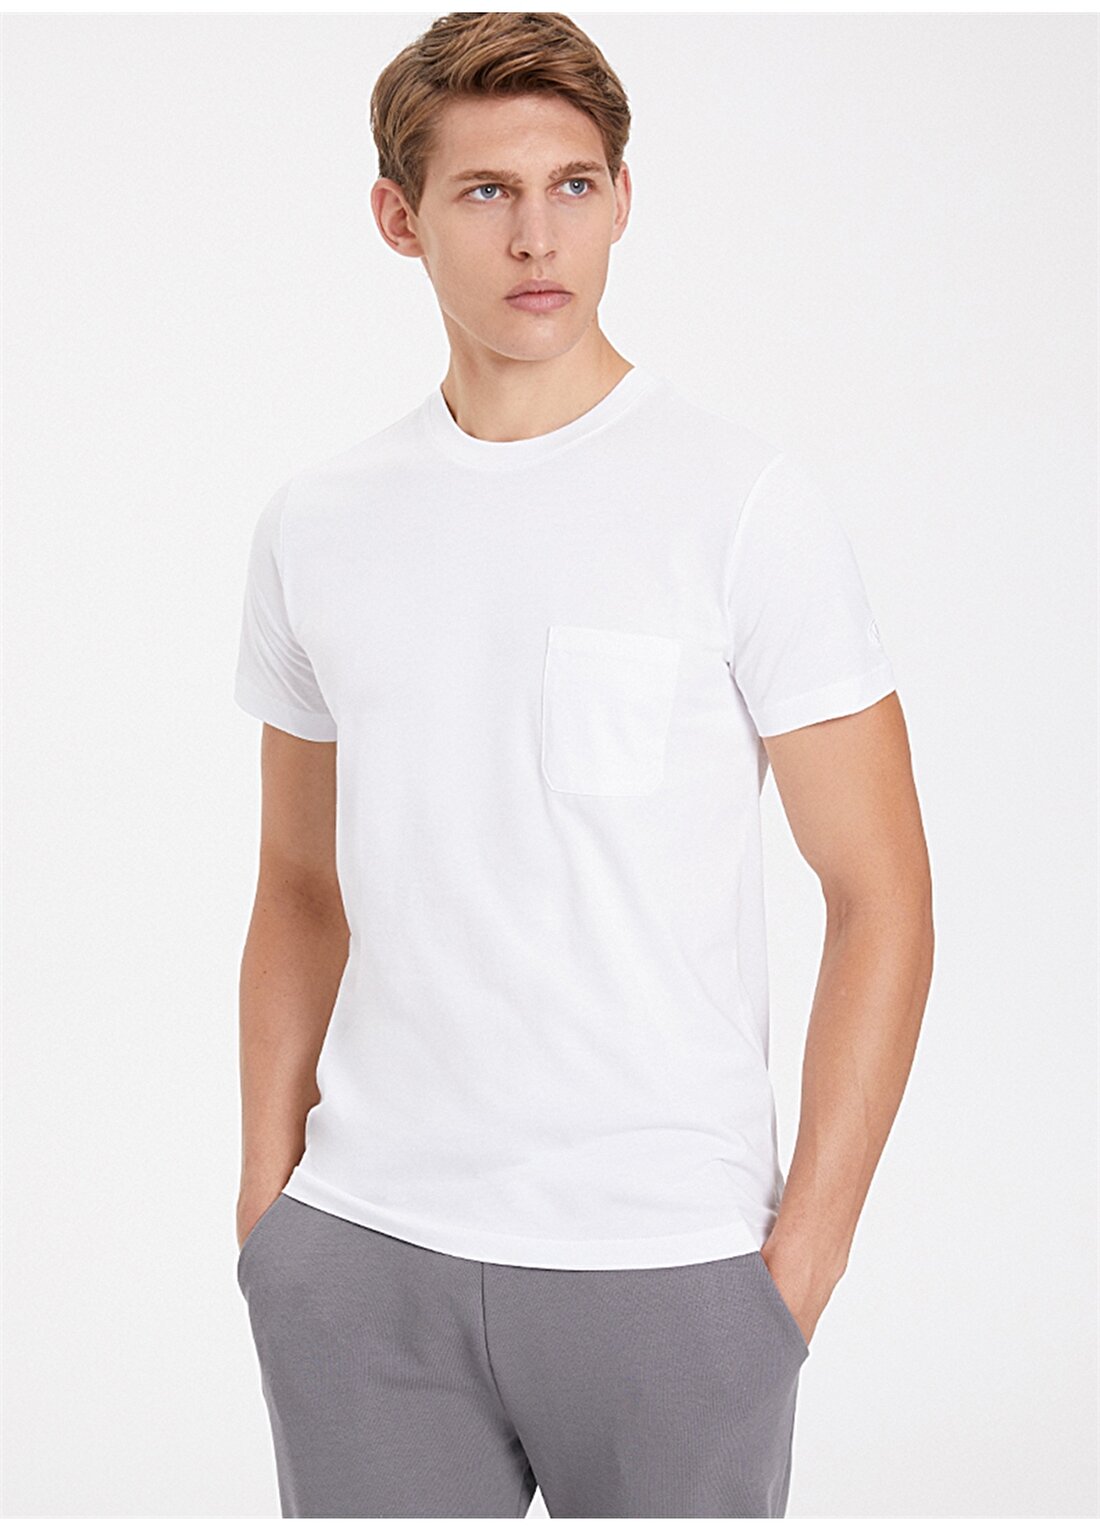 West Mark London Organik Pamuklu Beyaz T-Shirt